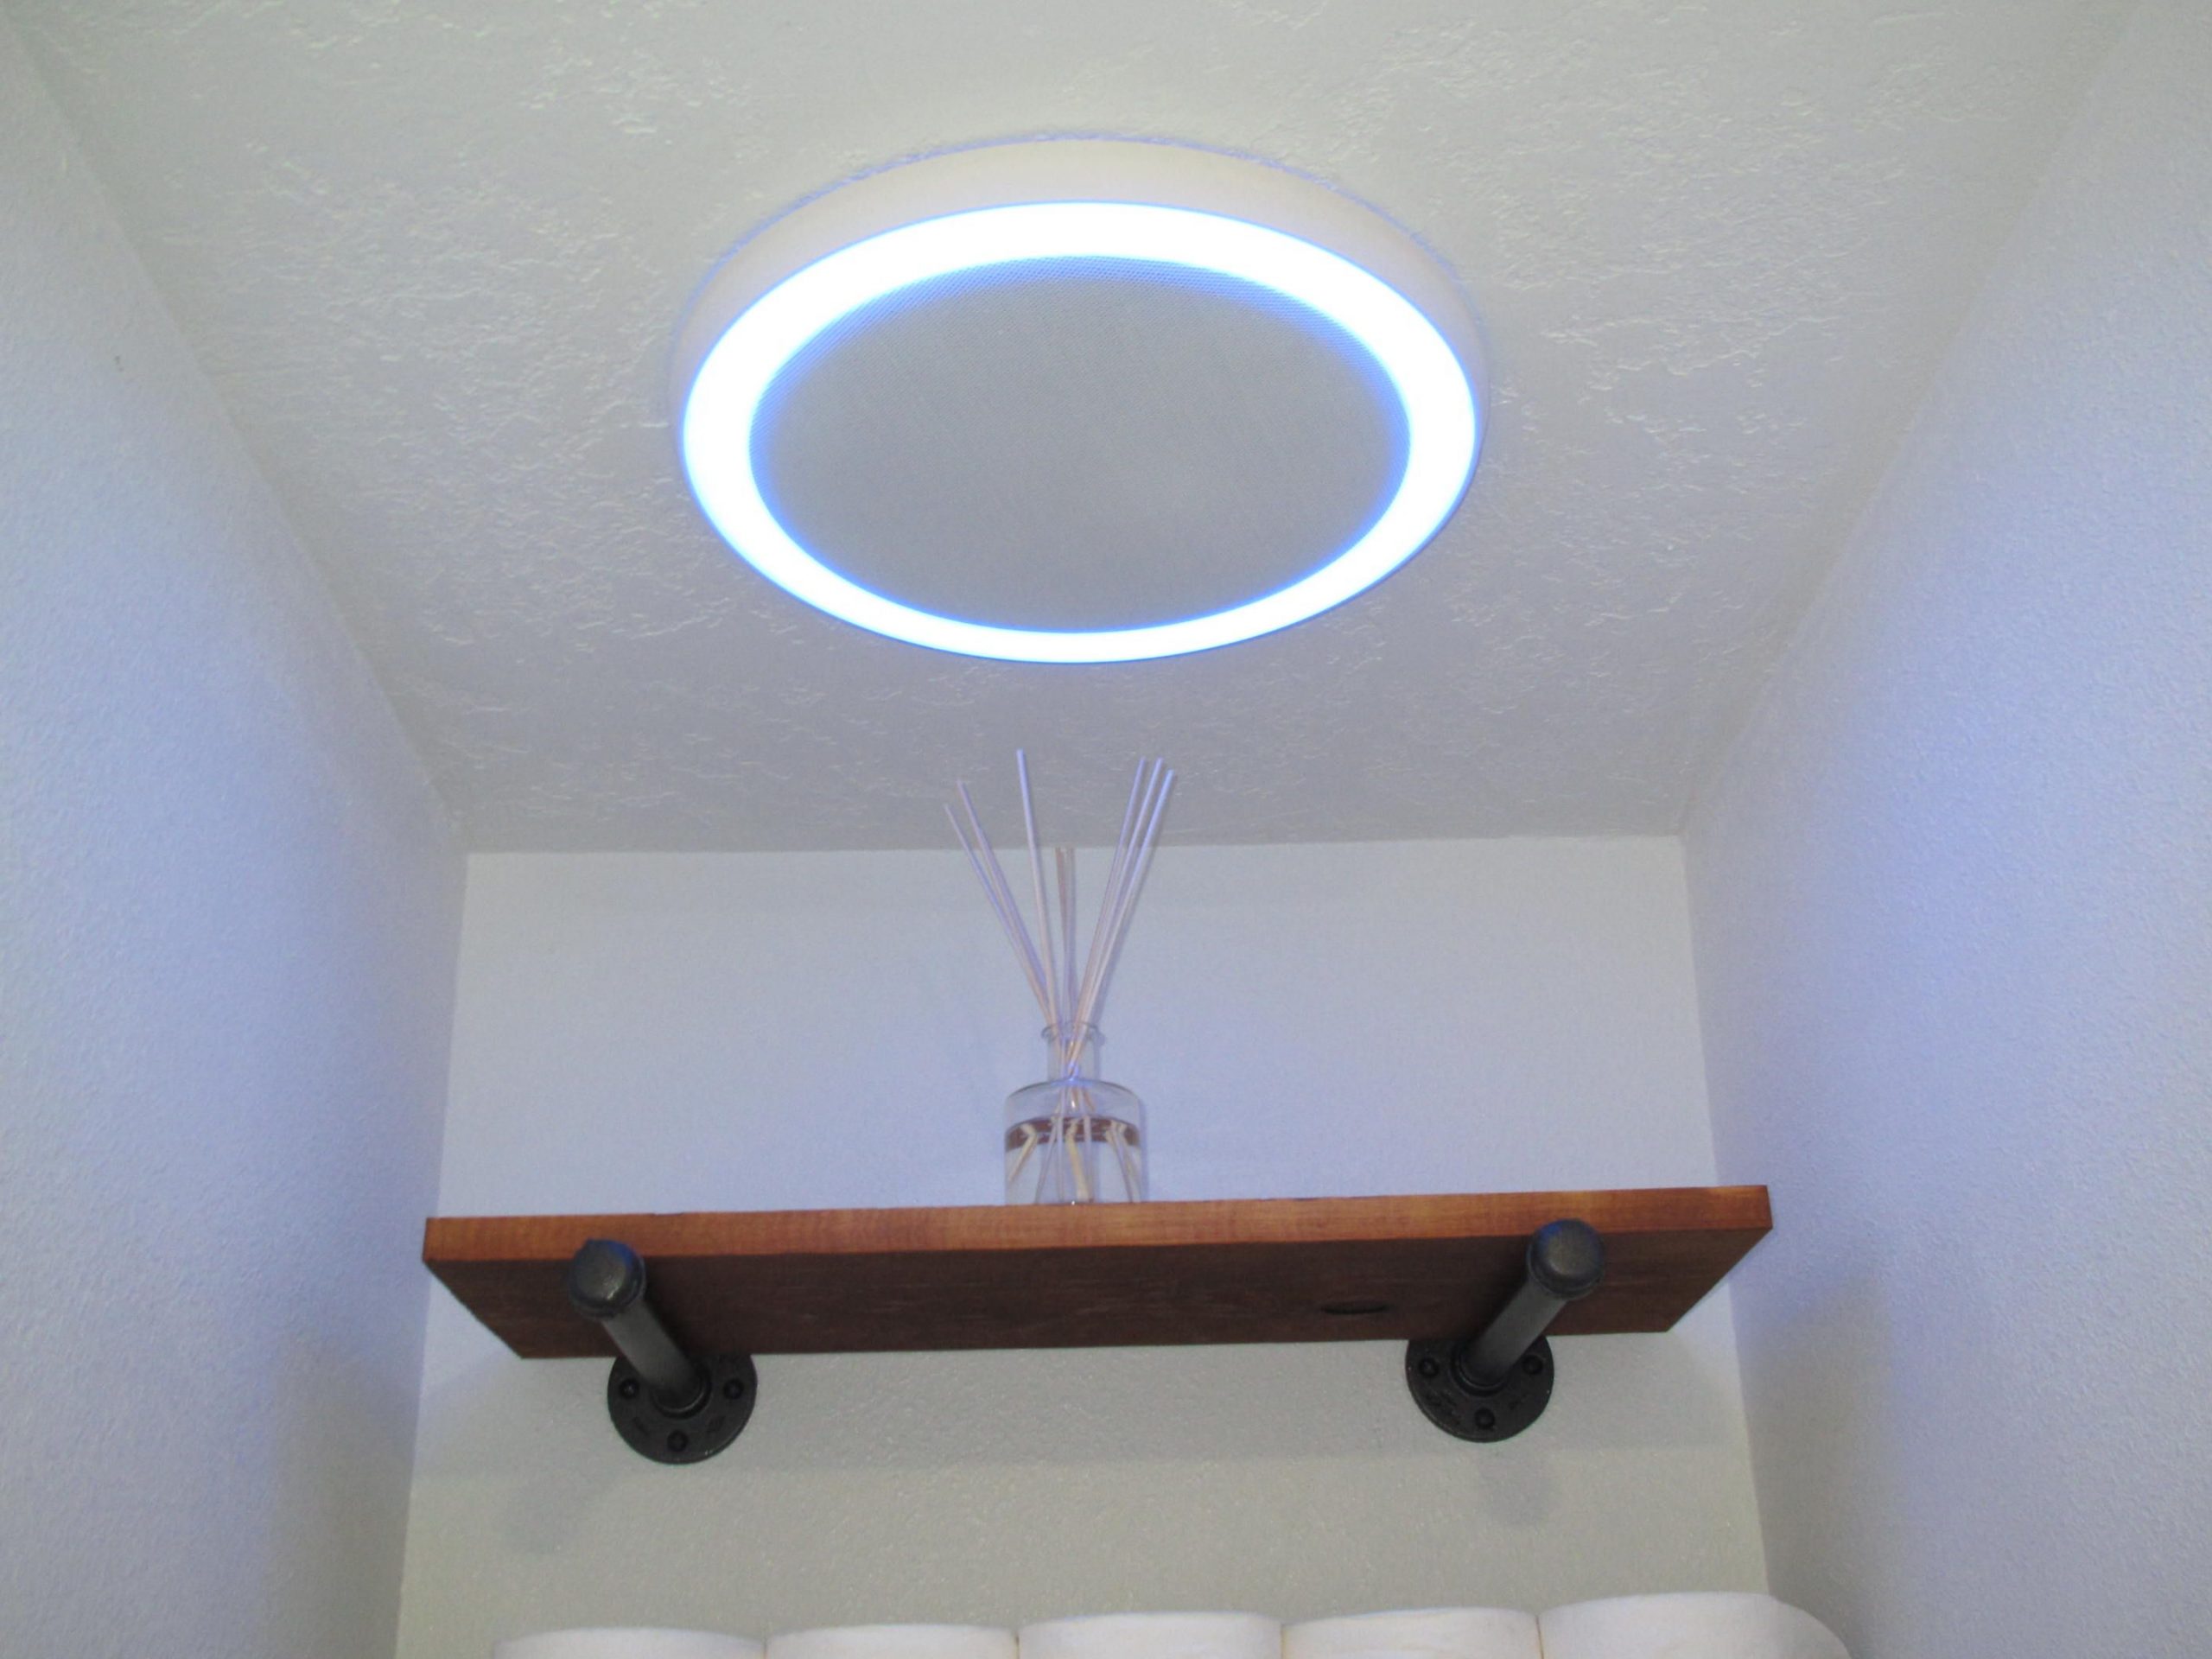 Bathroom Fan Wbluetooth Speaker Light And Blue Nightlight pertaining to dimensions 2816 X 2112